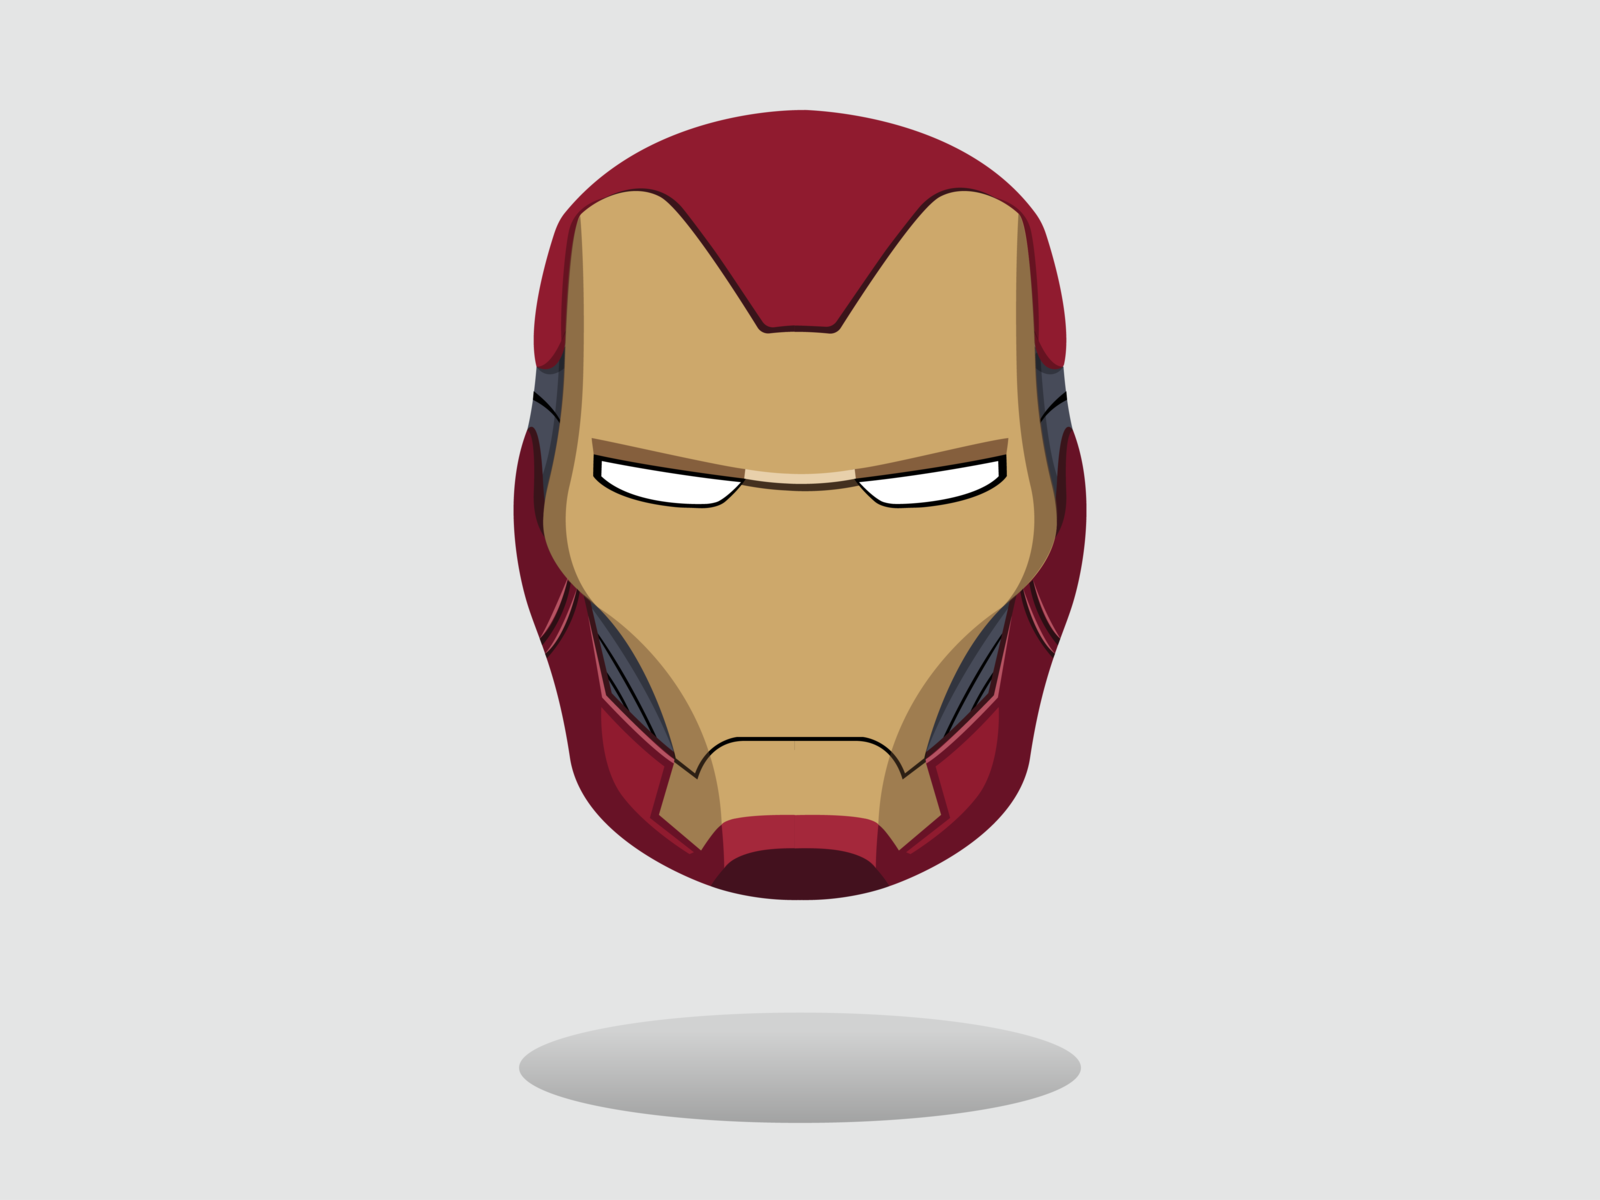 Iron Man Helmet by Atharva Jumde on Dribbble